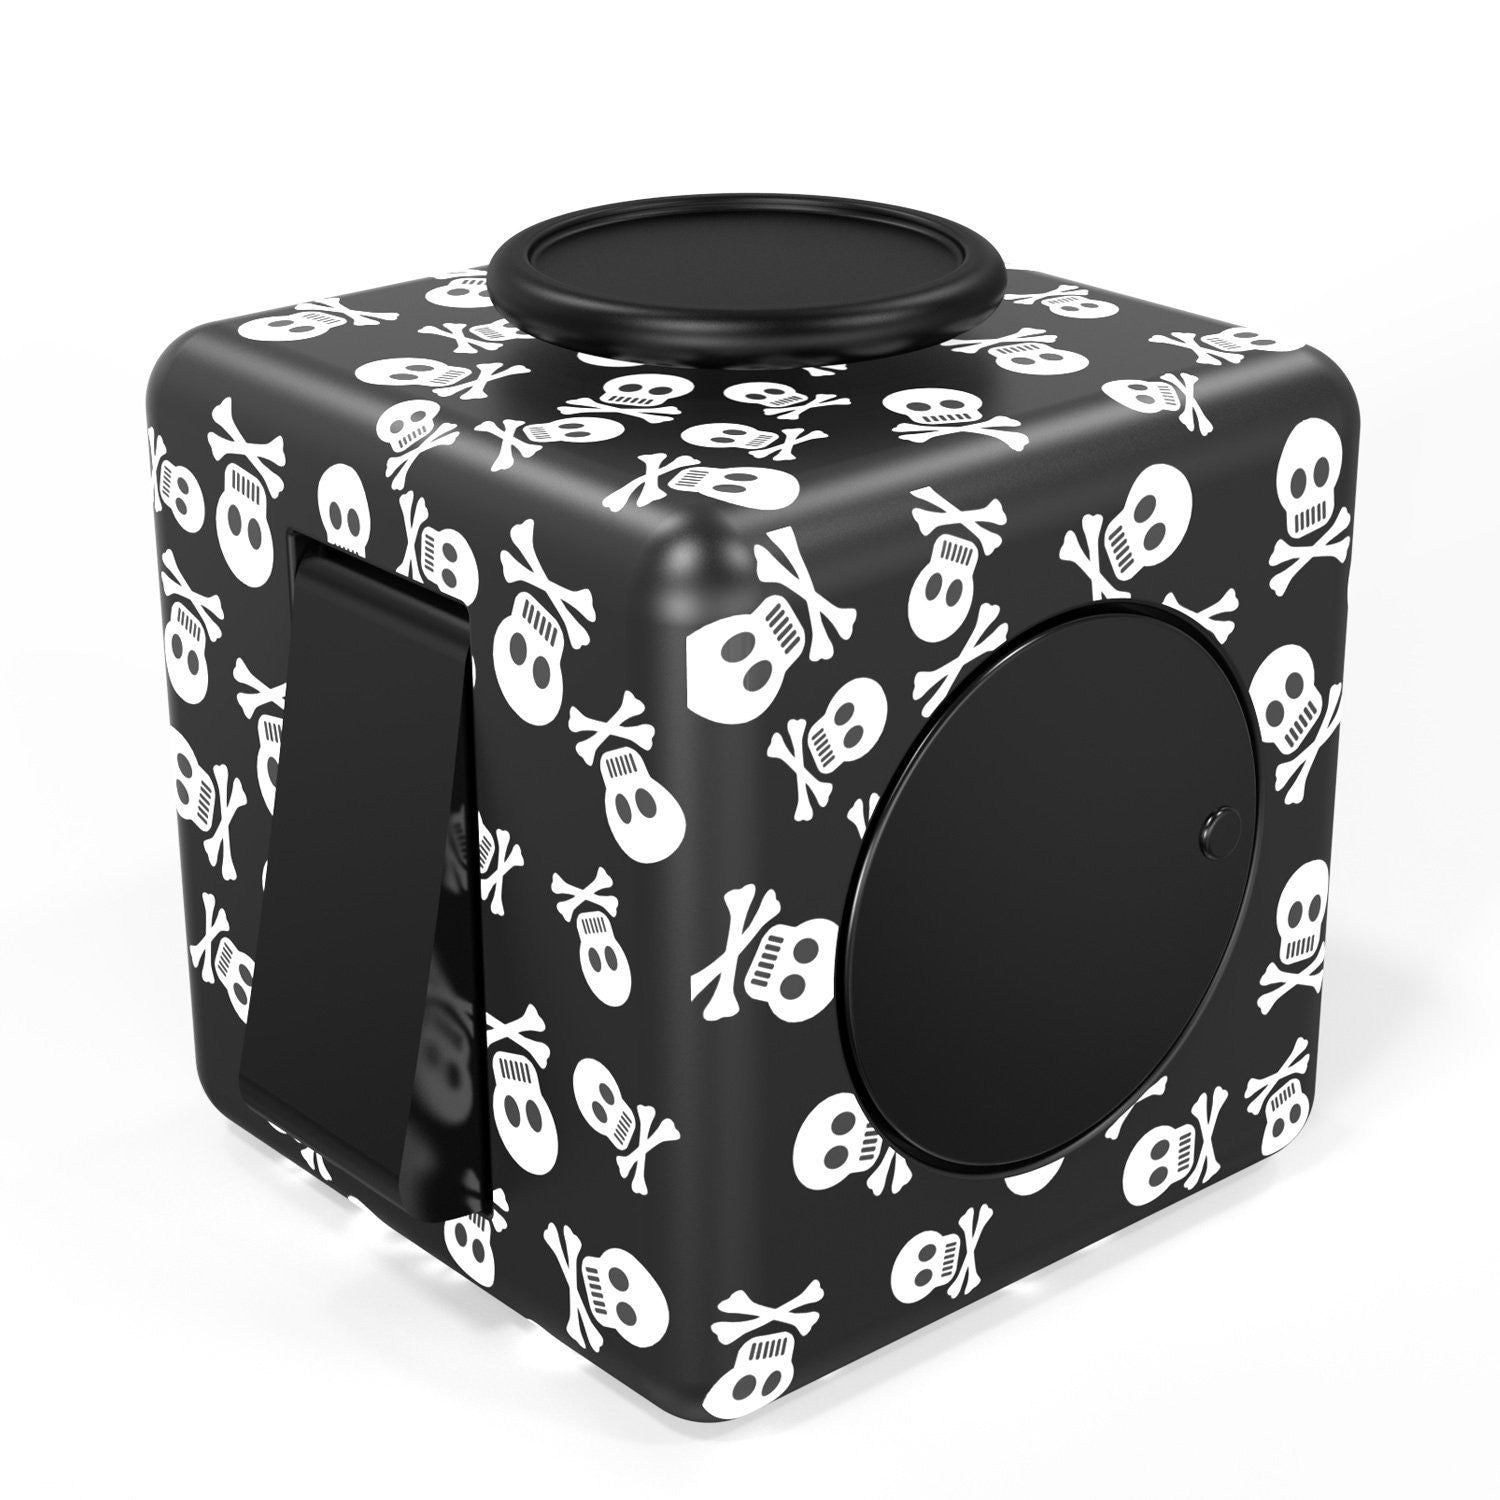 Cubo dado anti estrés - Fidget cube blanco y negro - FangoToys